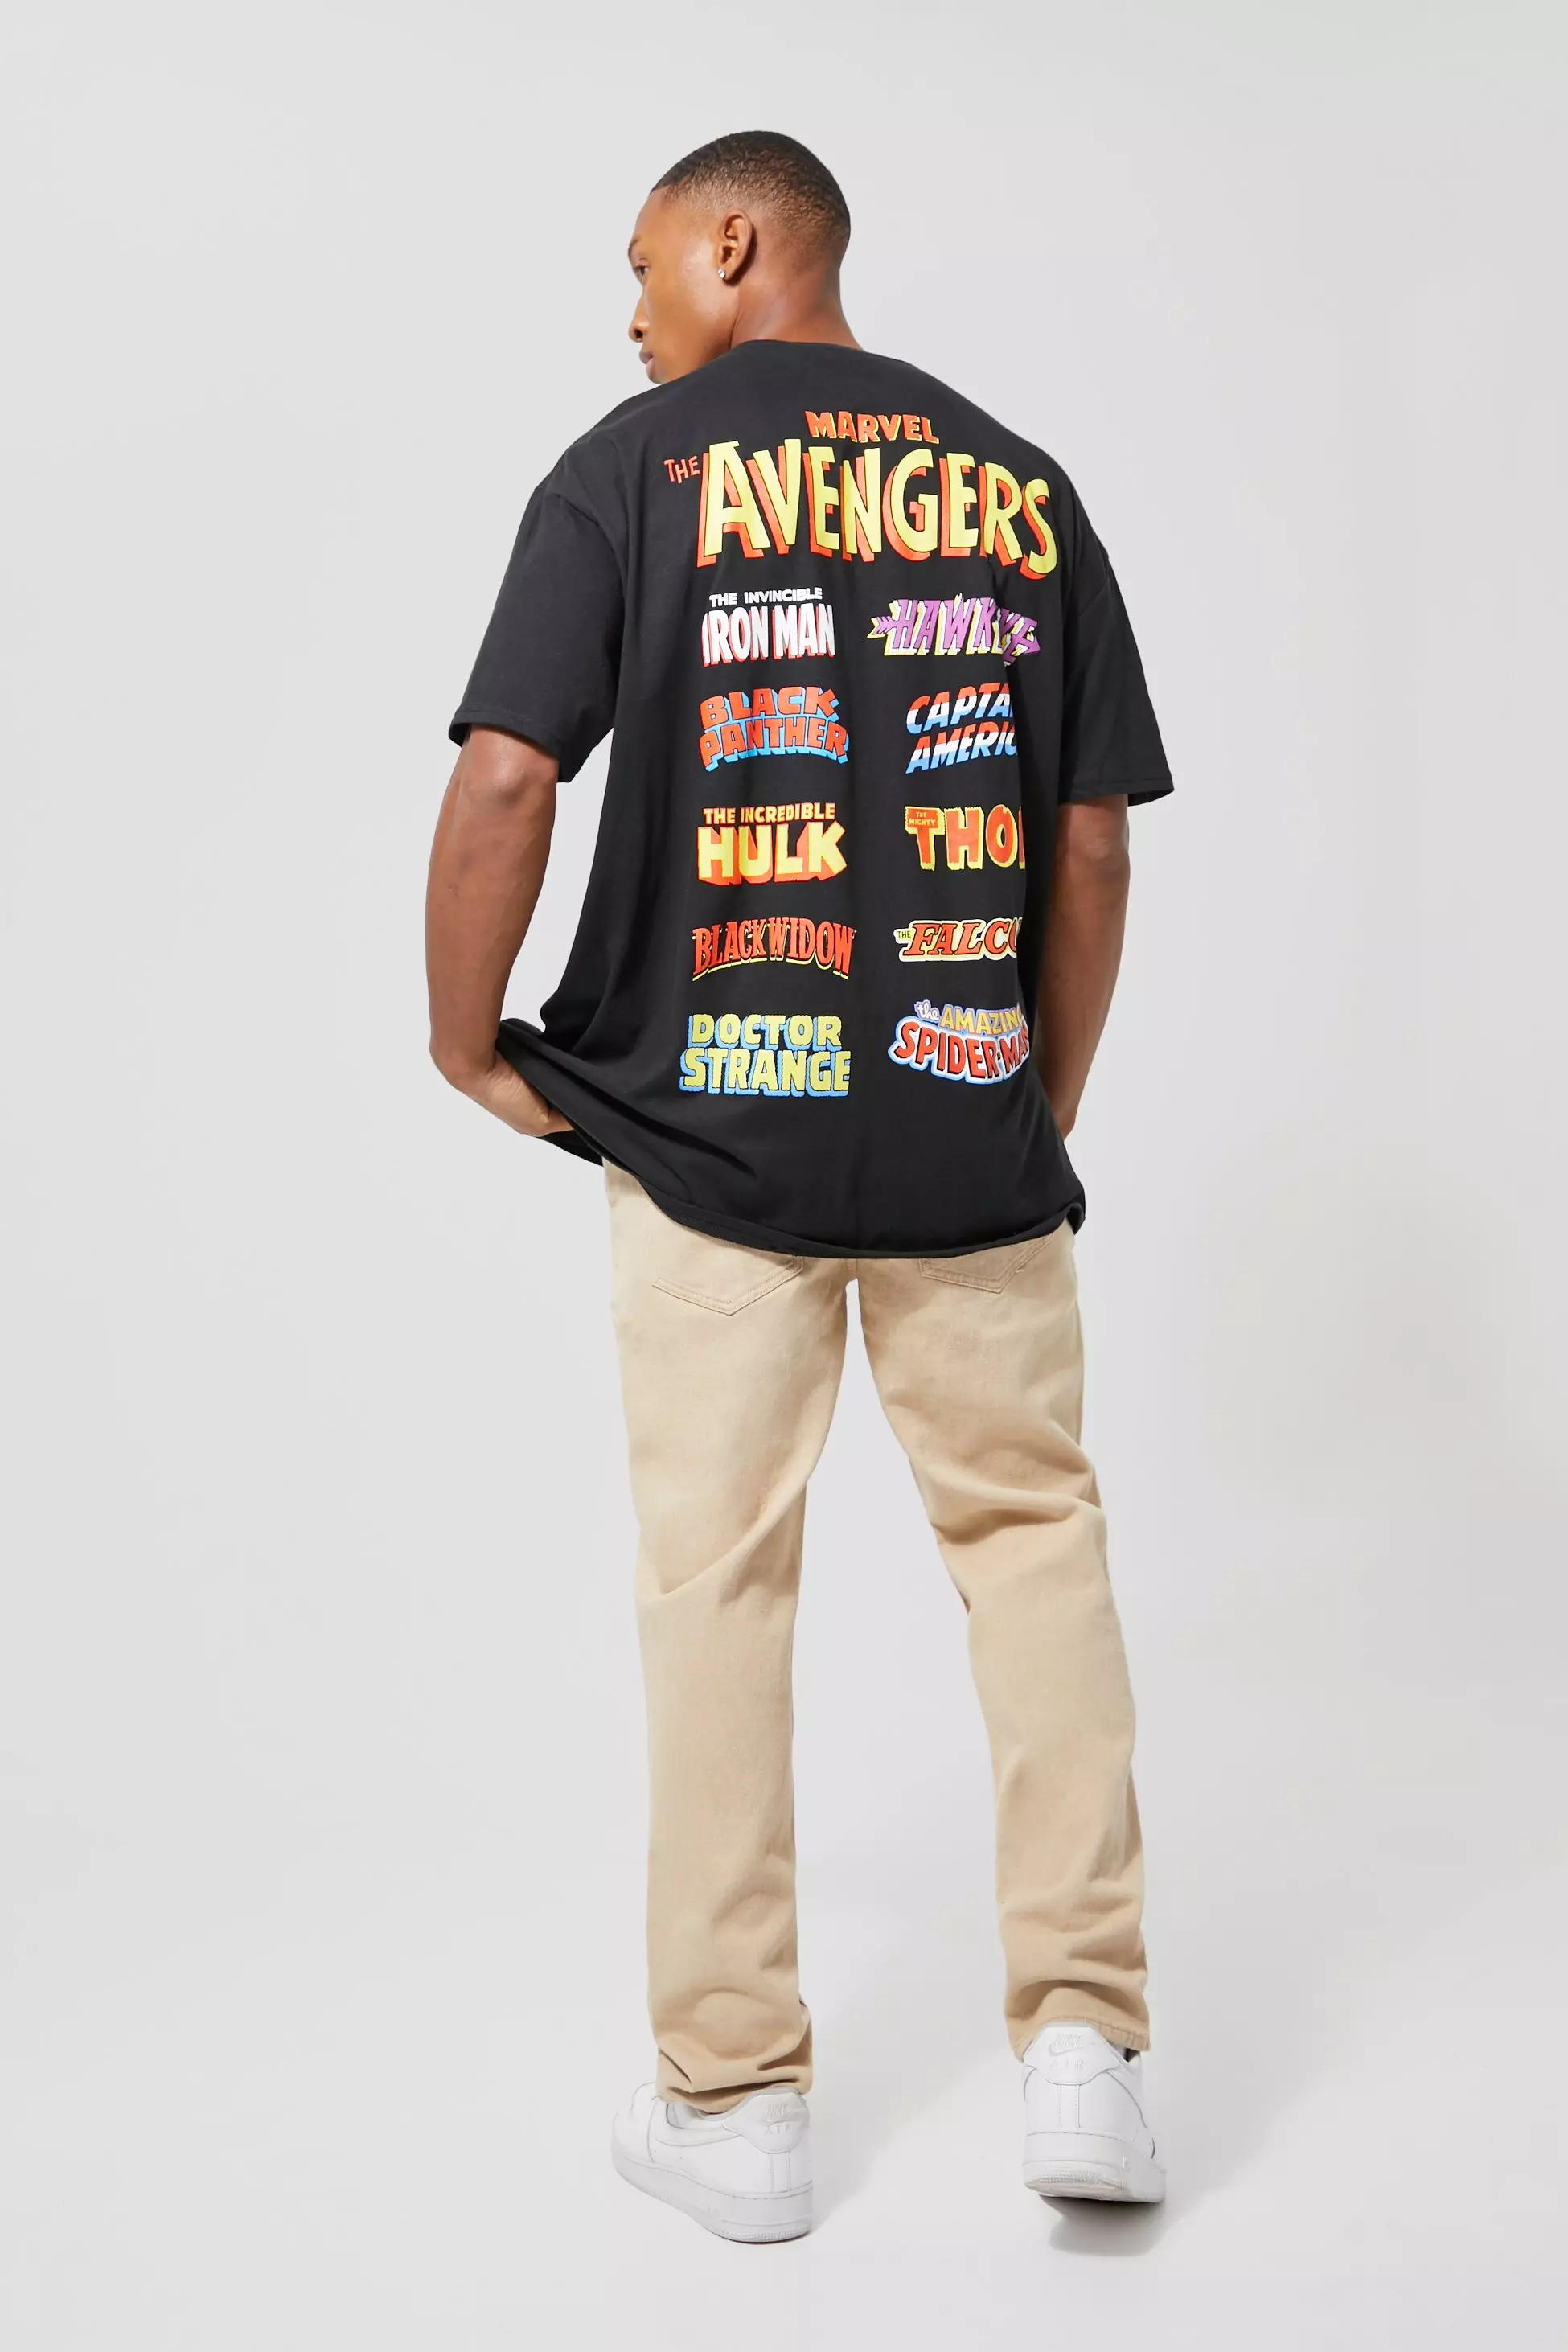 Marvel boohooMAN License | T-shirt Oversized USA Avengers